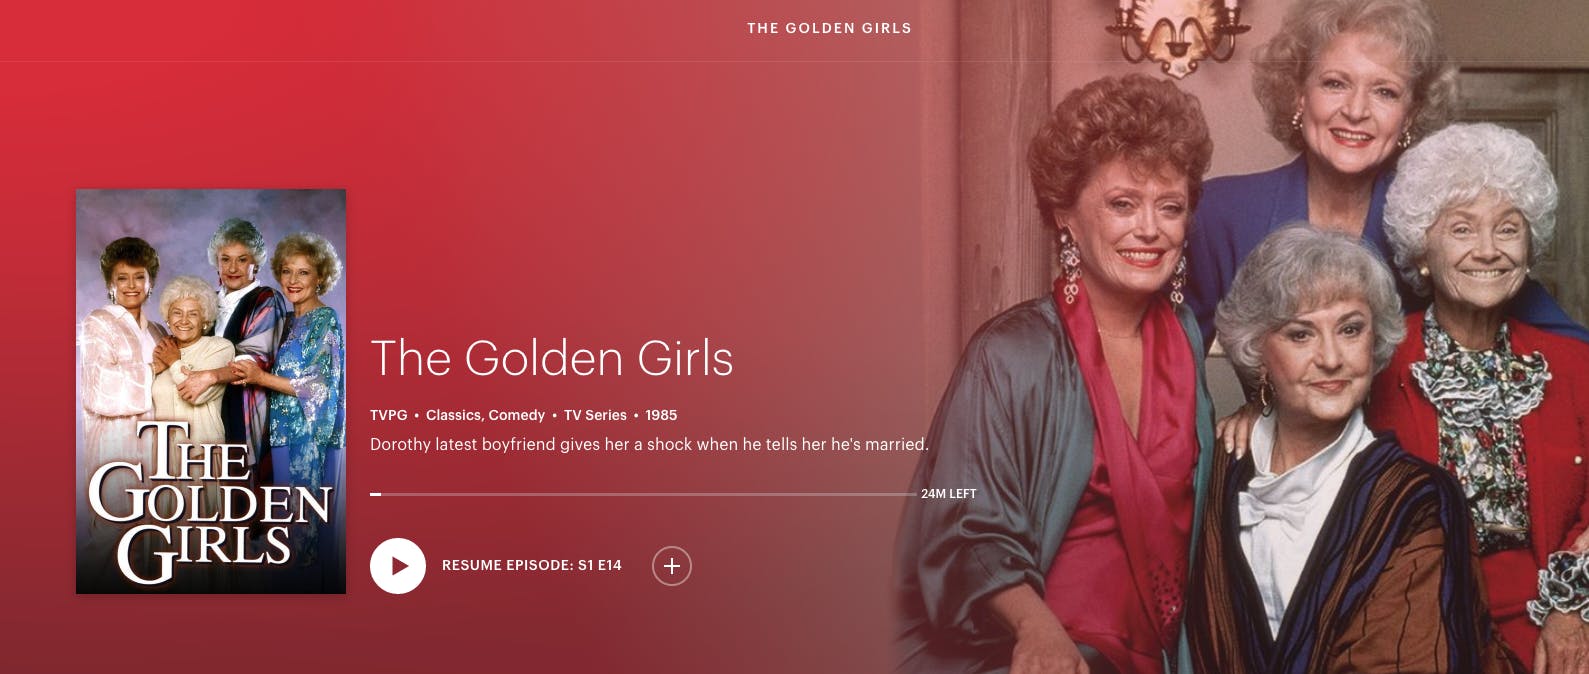 watch the golden girls free on Hulu